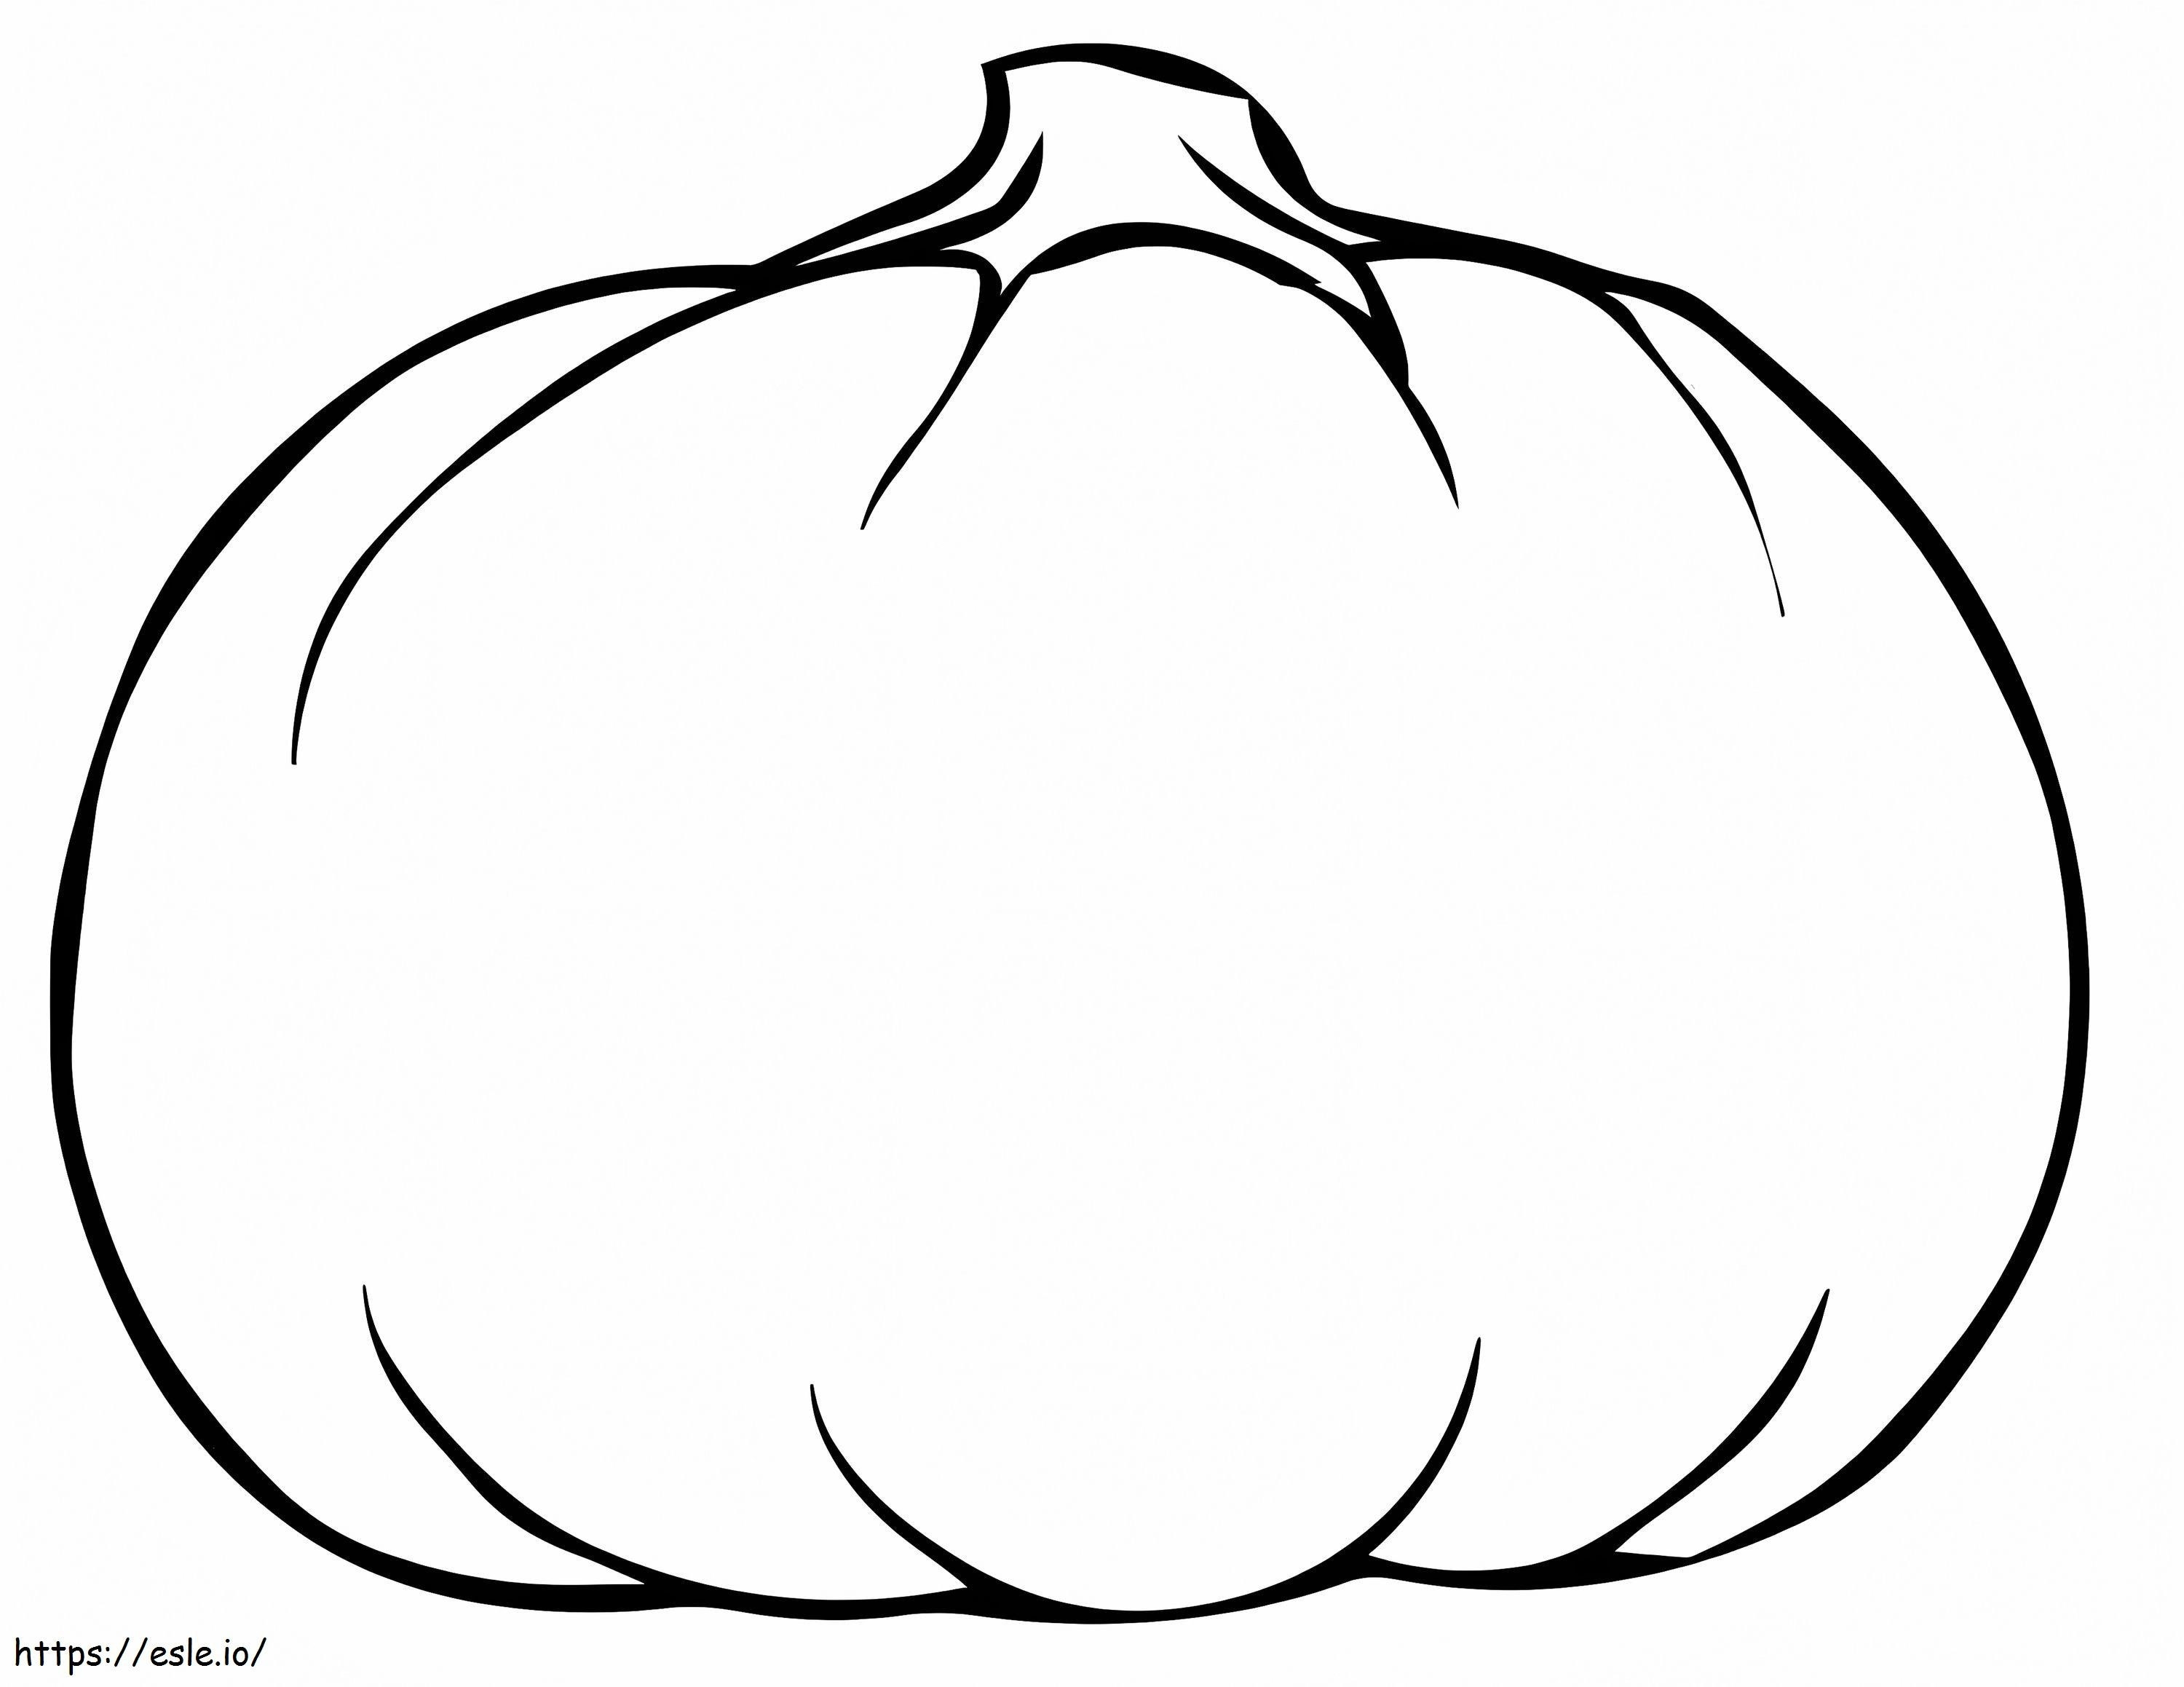 Single Pumpkin coloring page